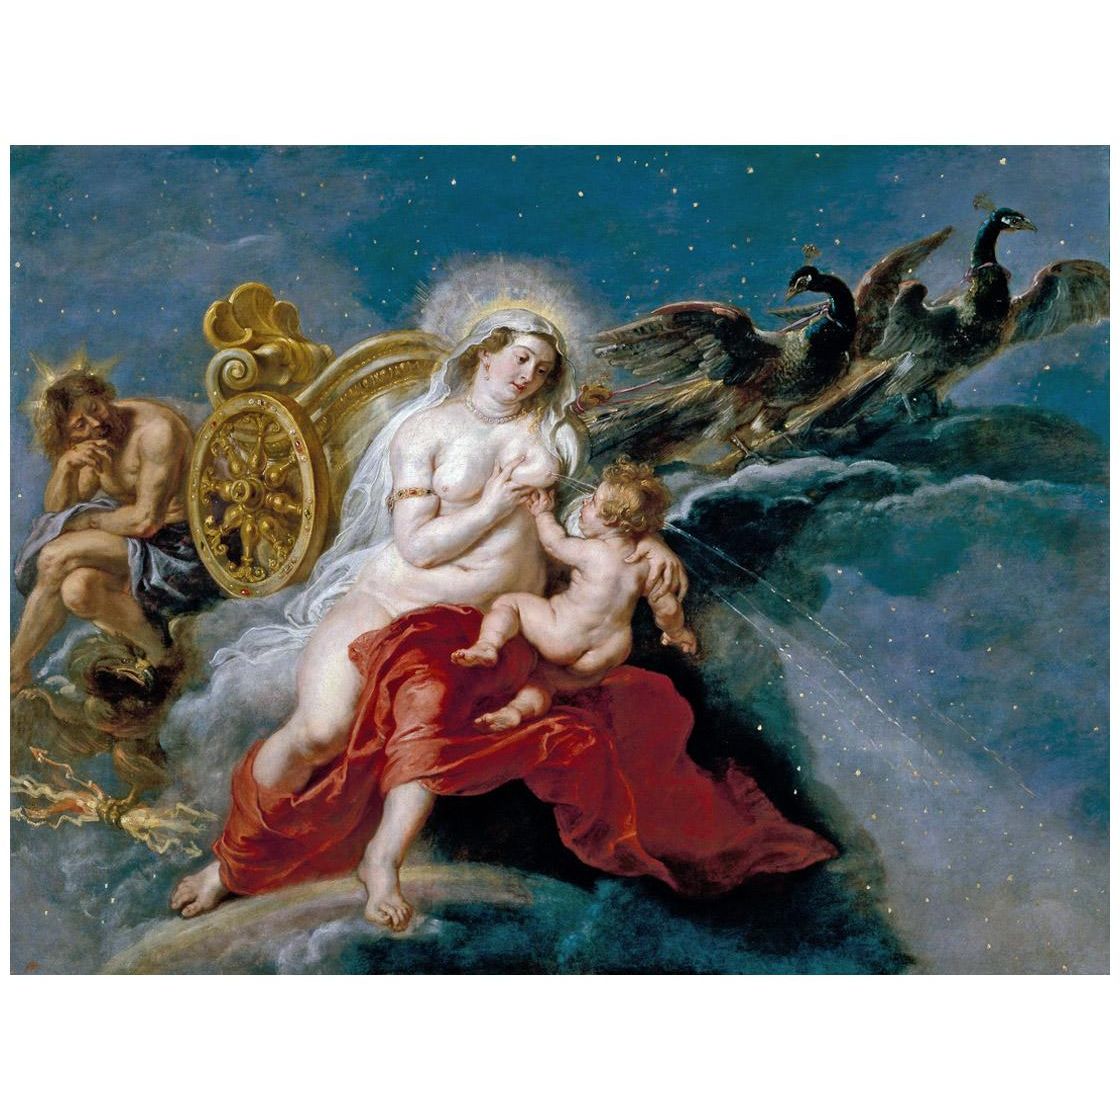 Peter Paul Rubens. The Birth of Milky Way. 1637. Museo del Prado Madrid